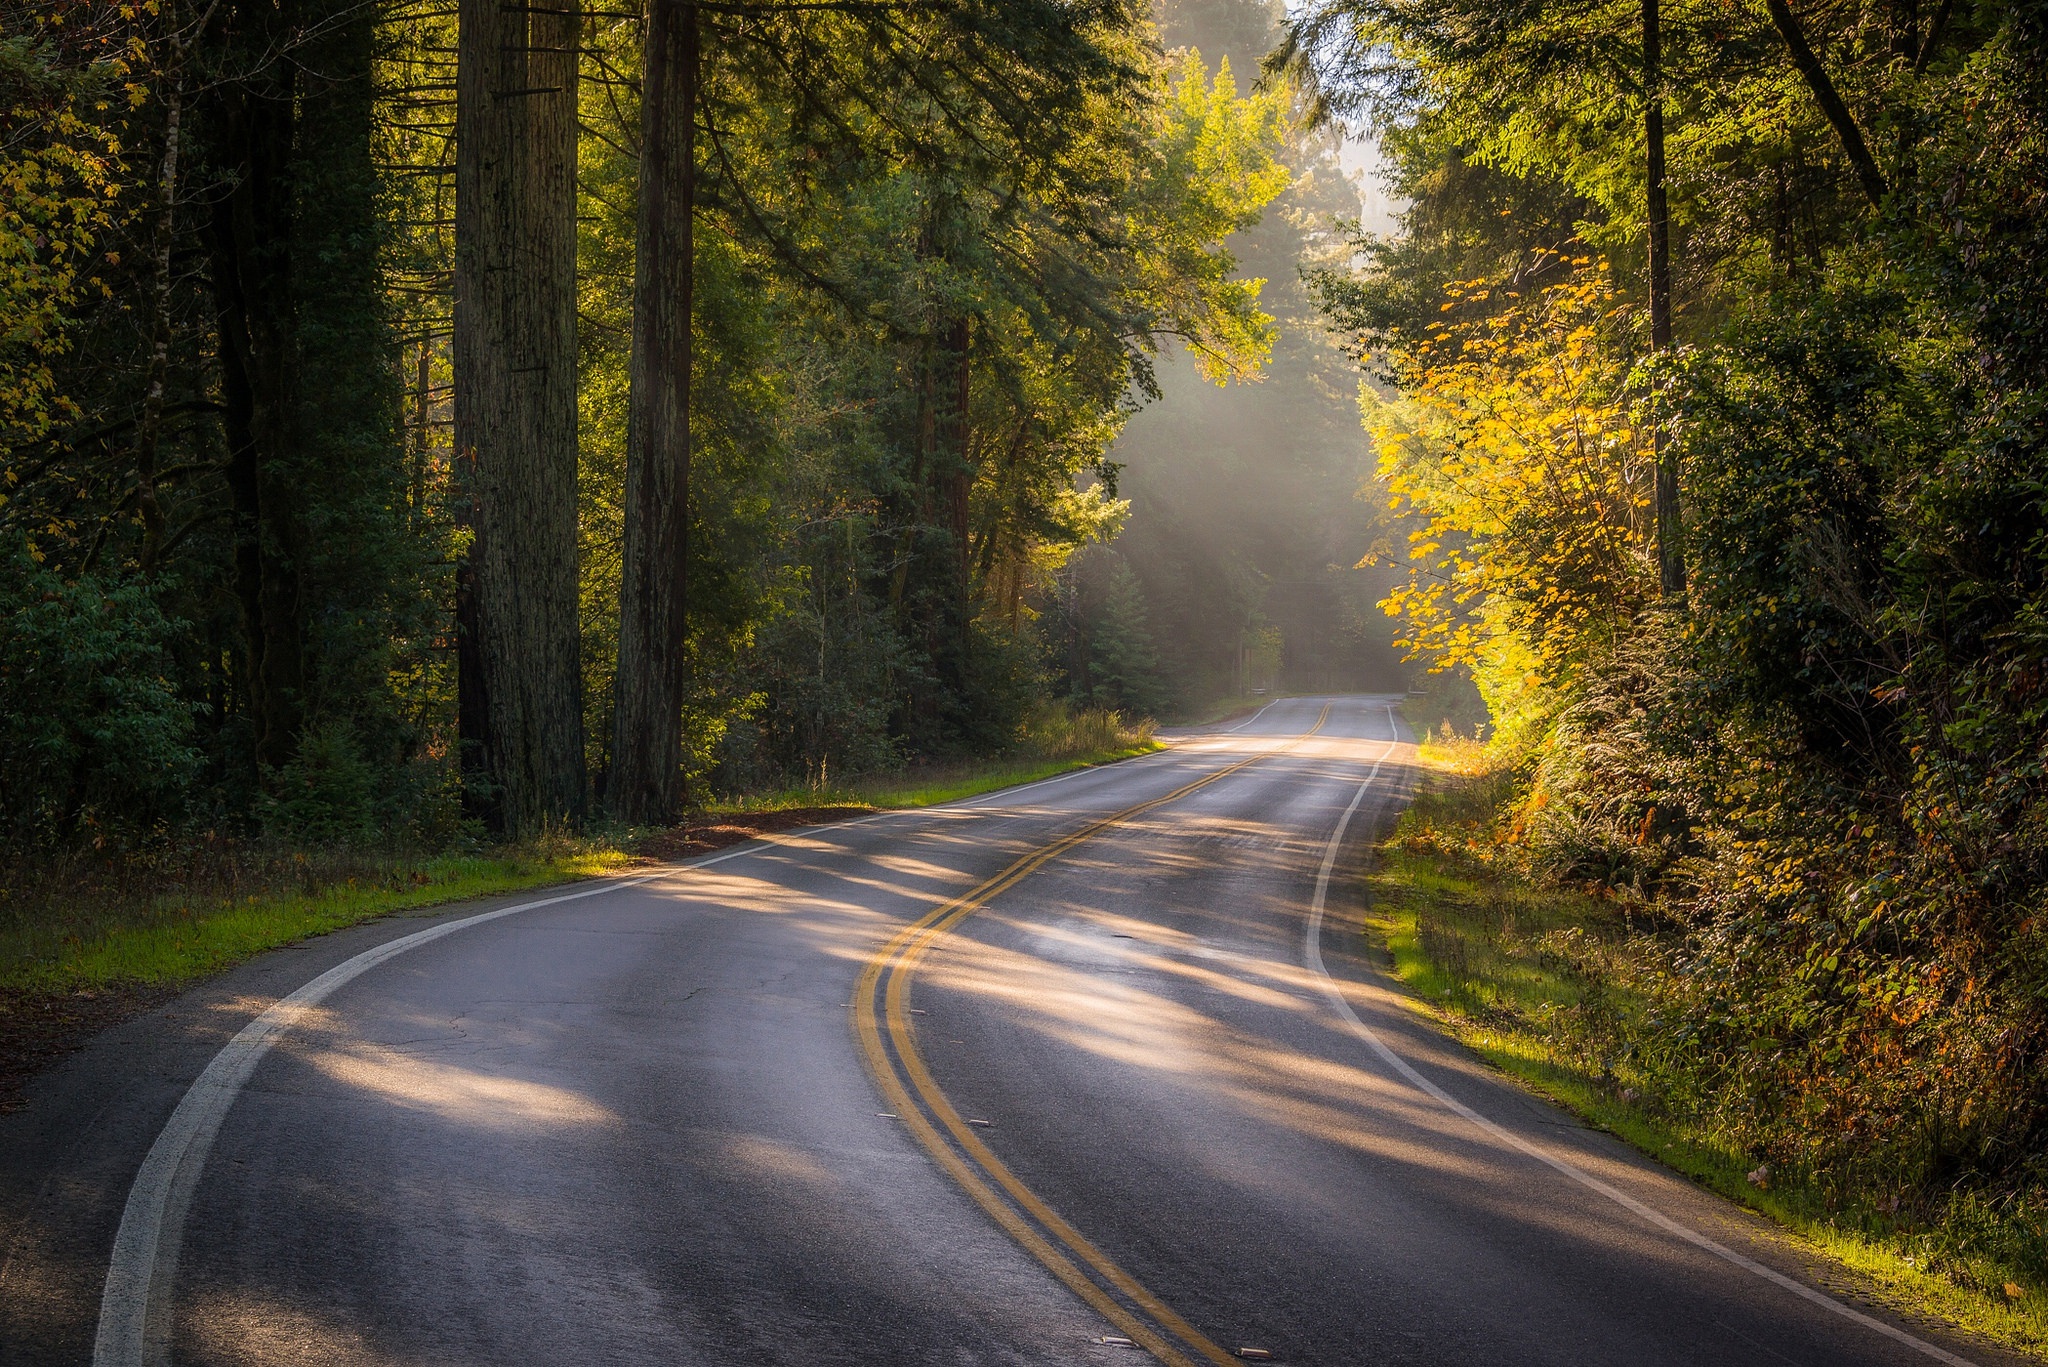 Дорога ведет в лес. Дорога в лесу. Лесная дорога. Красивая дорога. Пейзаж с дорогой.